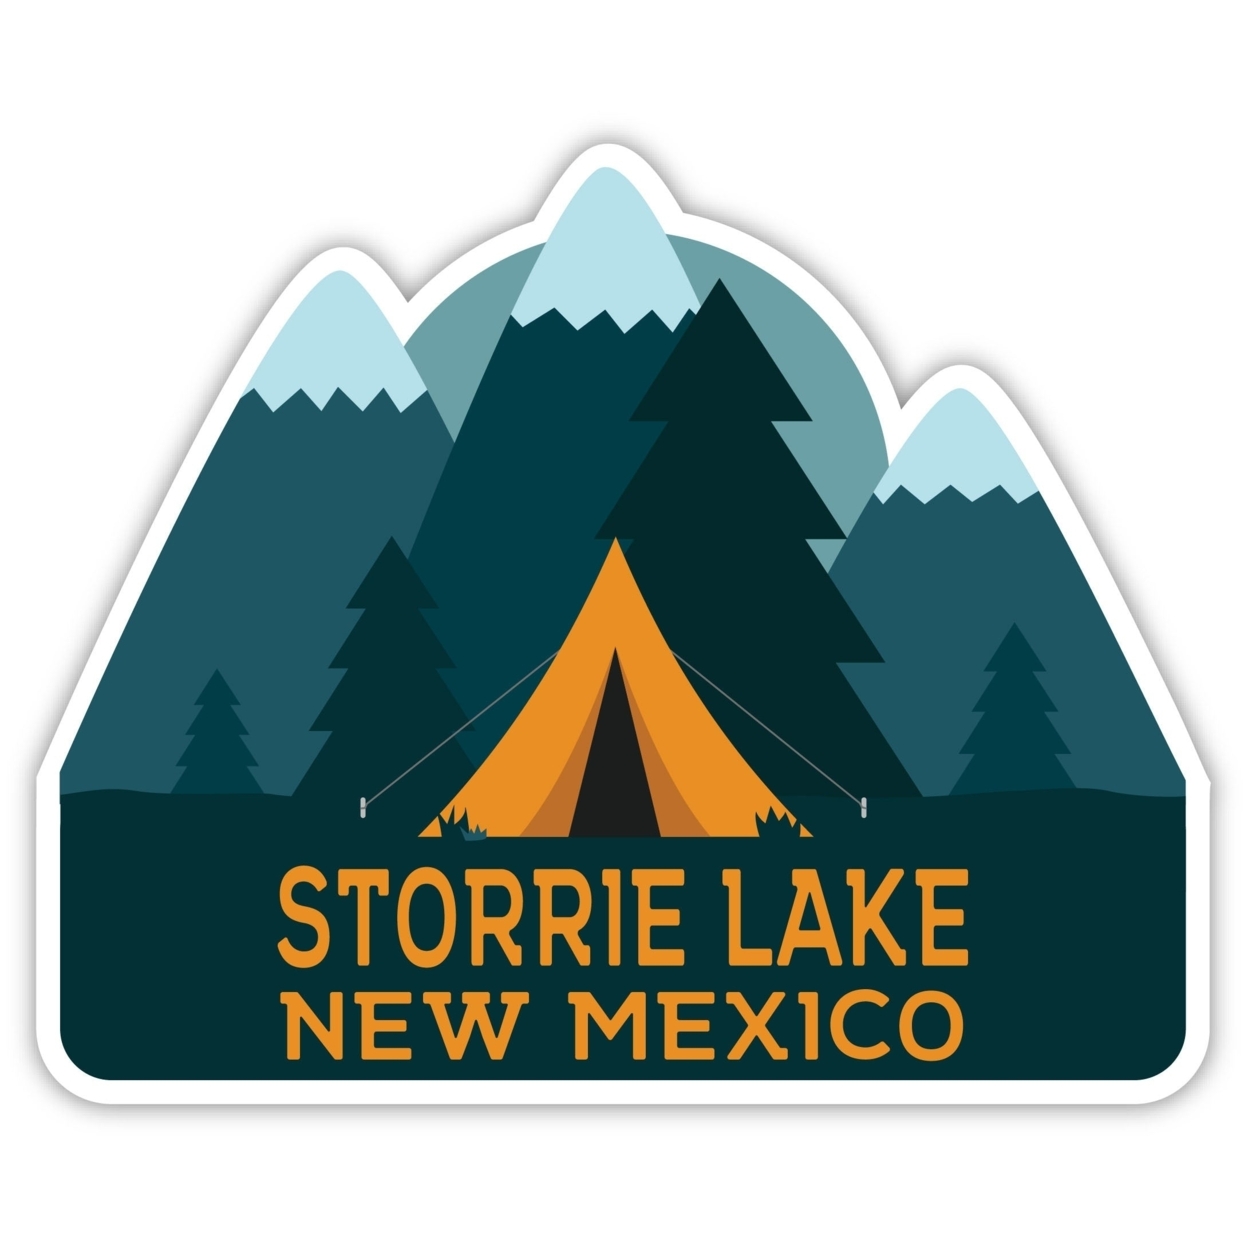 Storrie Lake New Mexico Souvenir Decorative Stickers (Choose Theme And Size) - Single Unit, 2-Inch, Tent